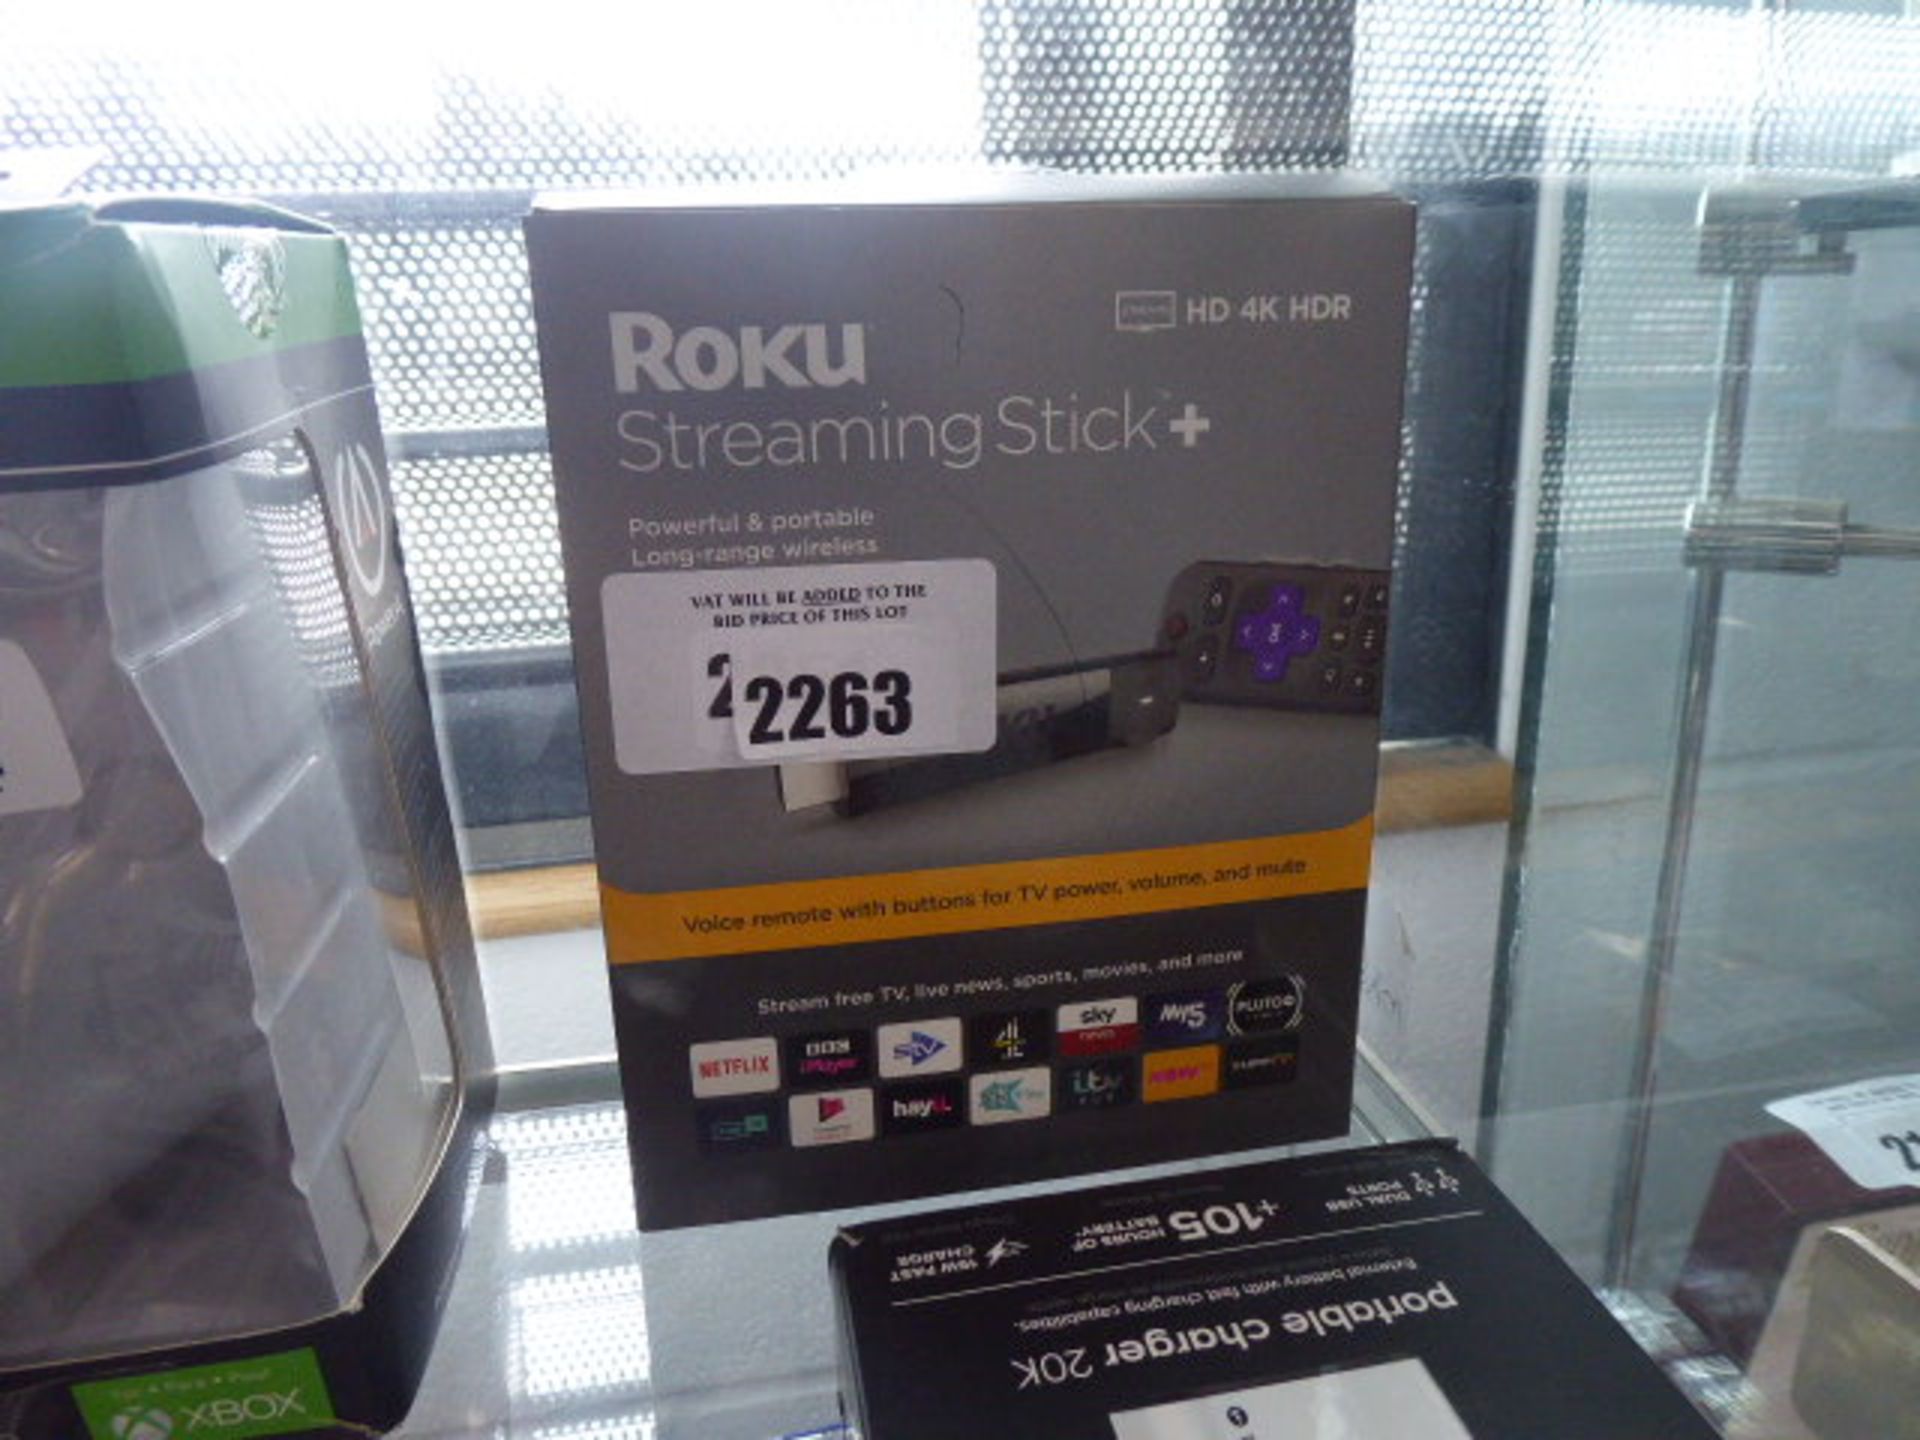 2351 Roku streaming stick + in box